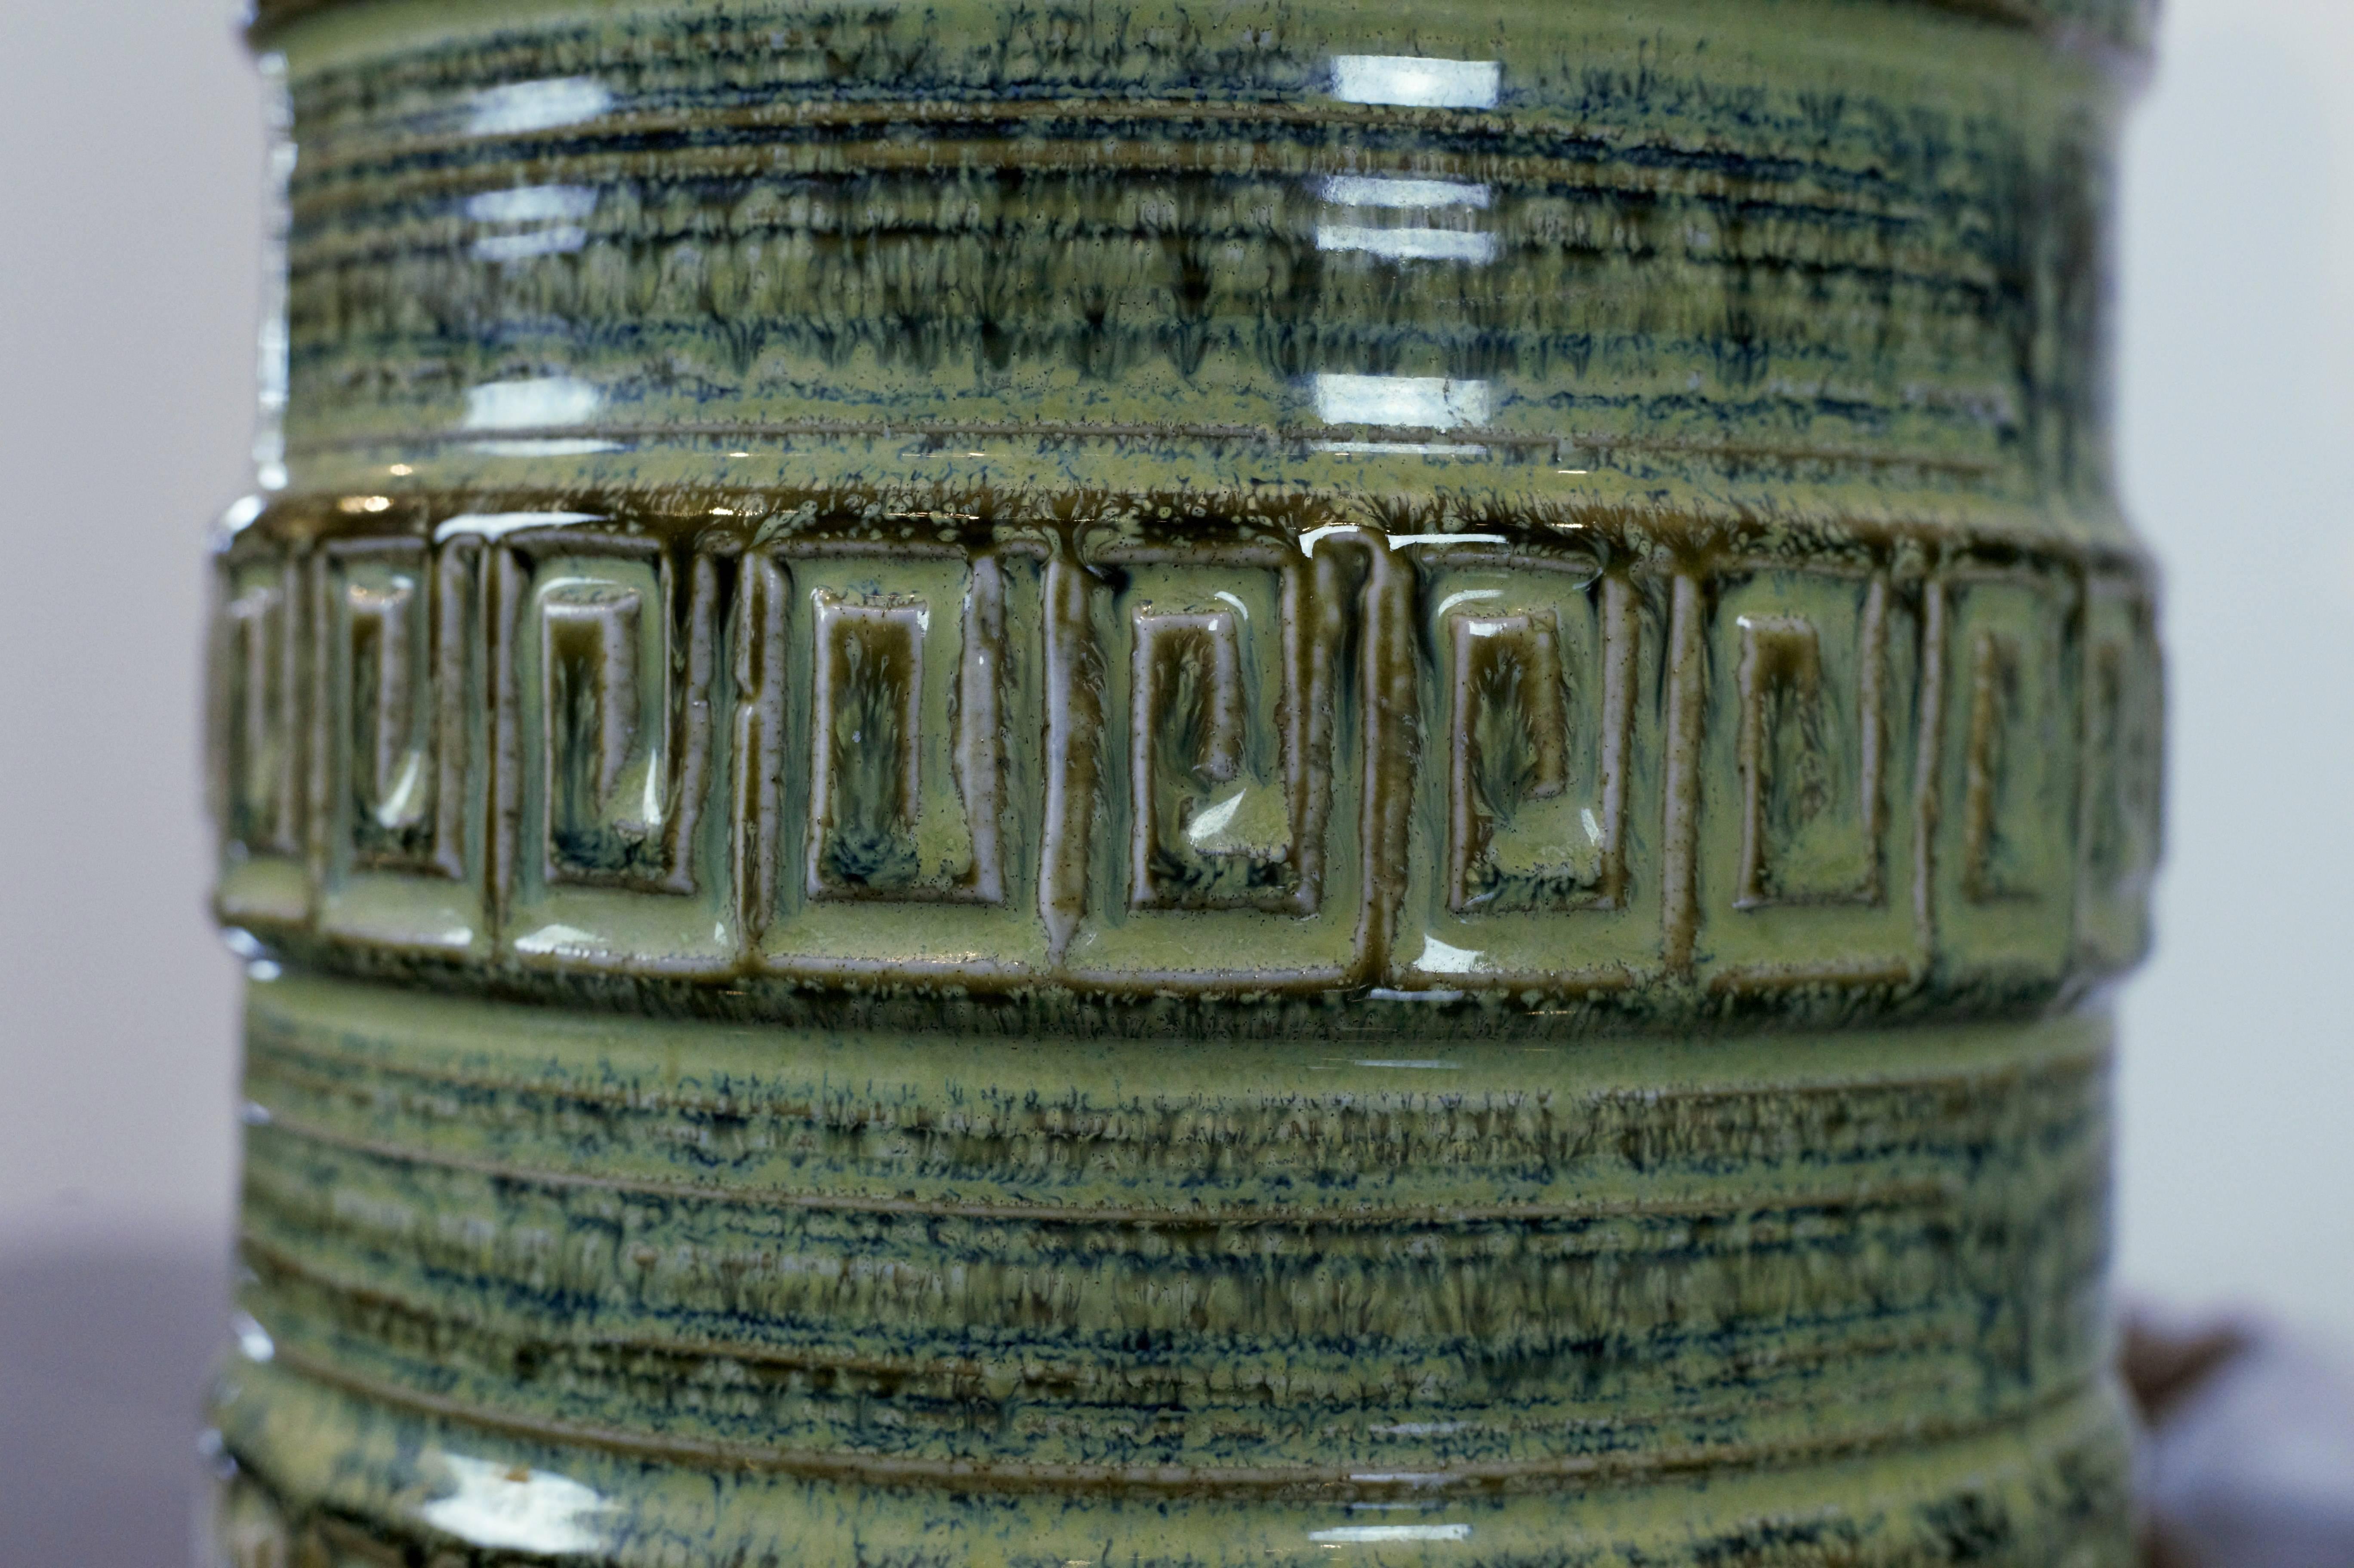 American Mid-Century Modern Pottery Lamp with Greek Key Patterning